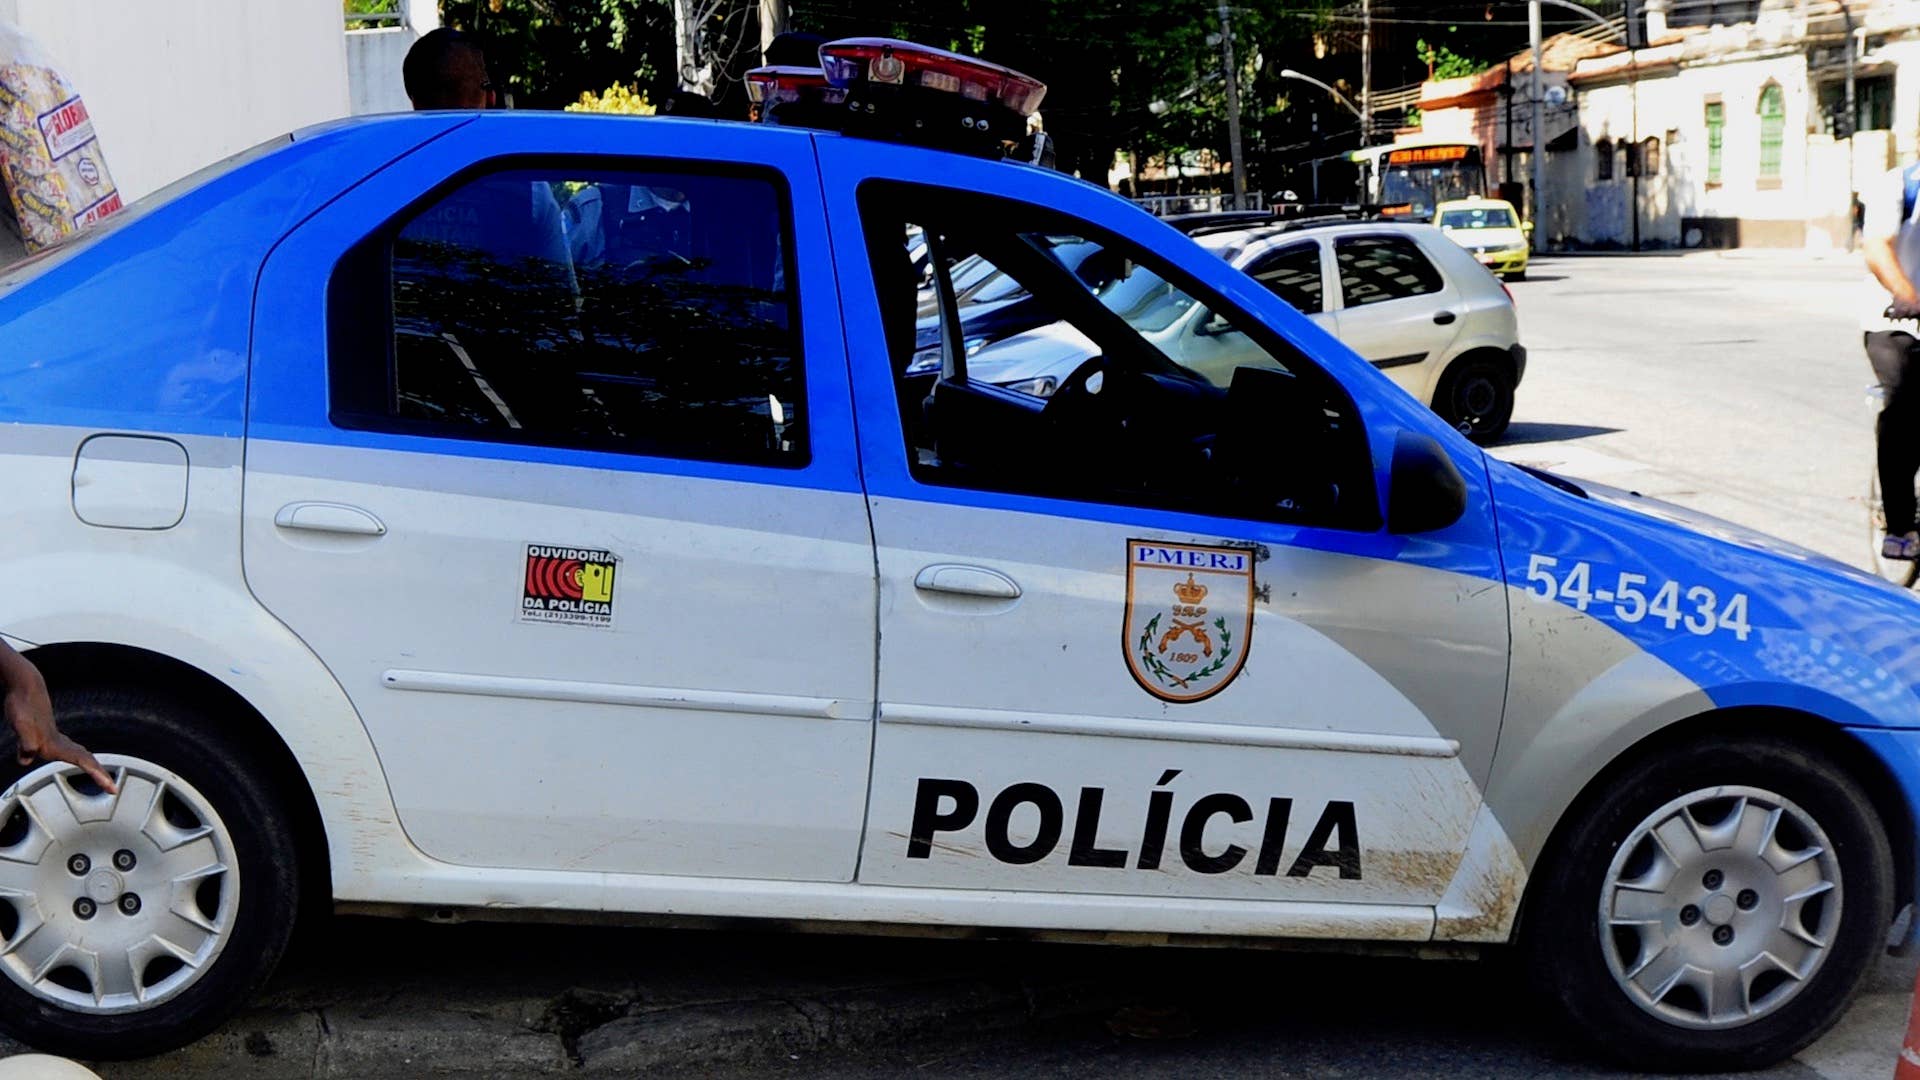 RIO DE JANEIRO police car.